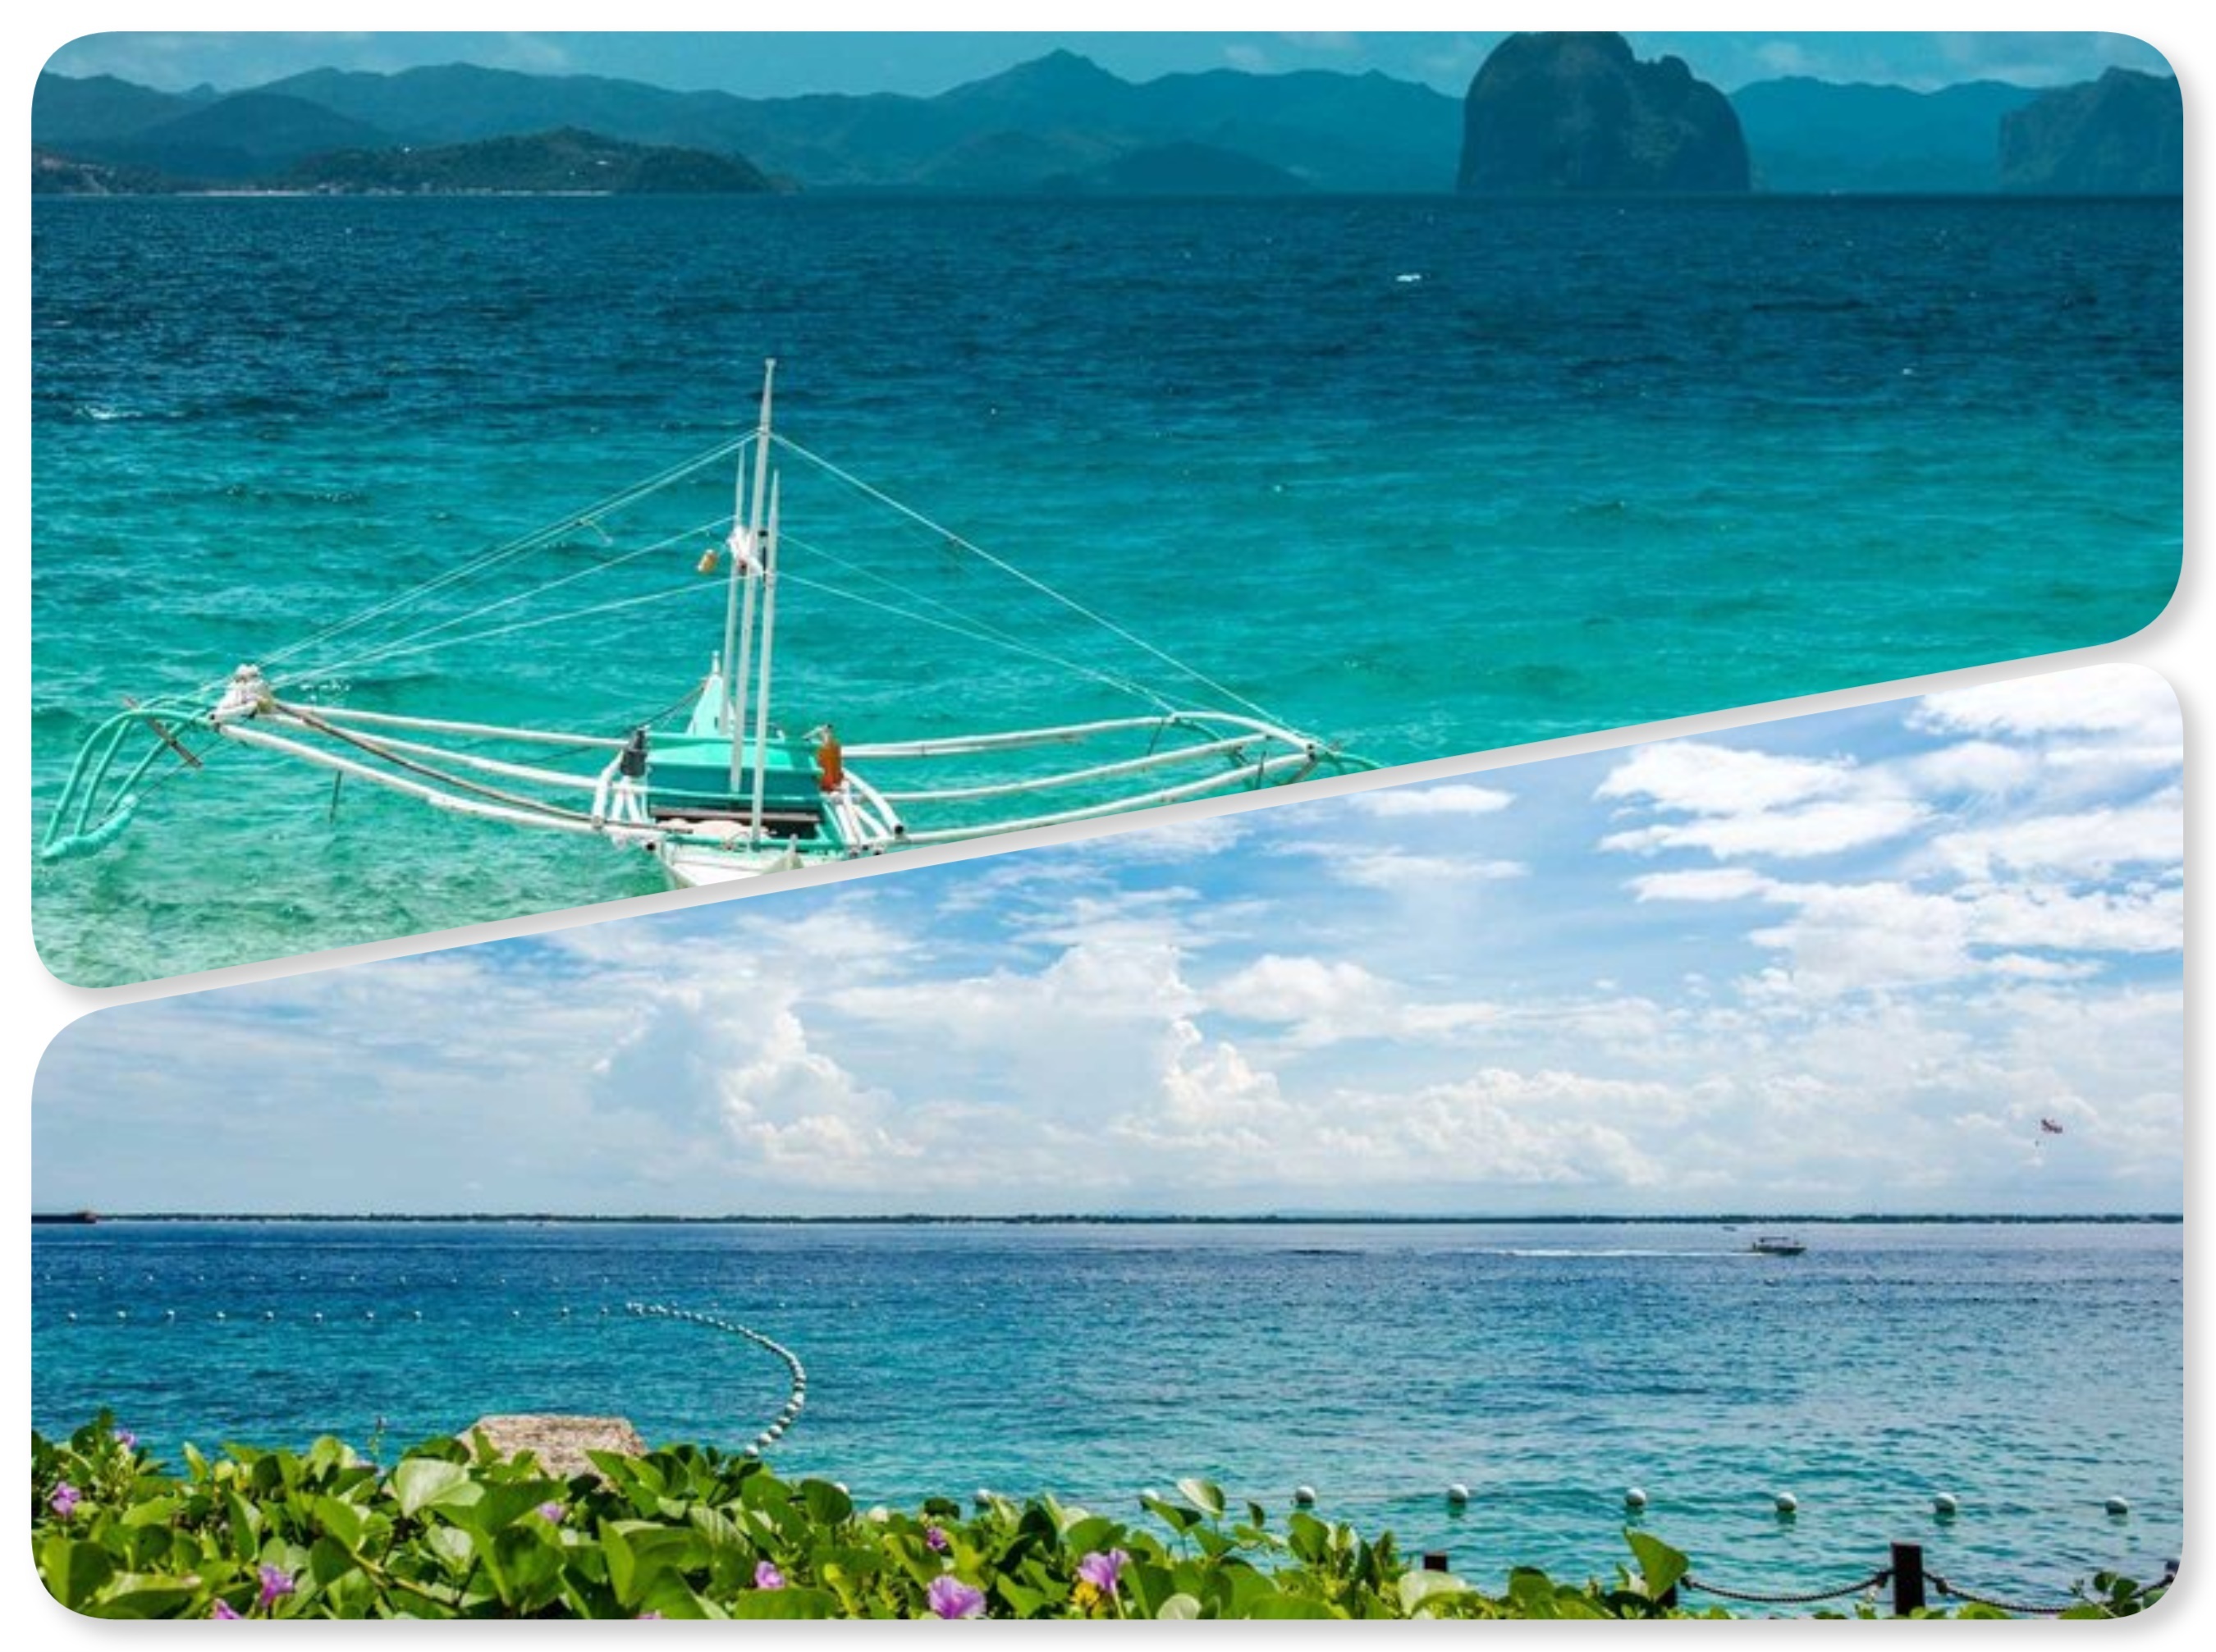 Palawan and Cebu star in Travel & Leisure’s World’s Best Islands list